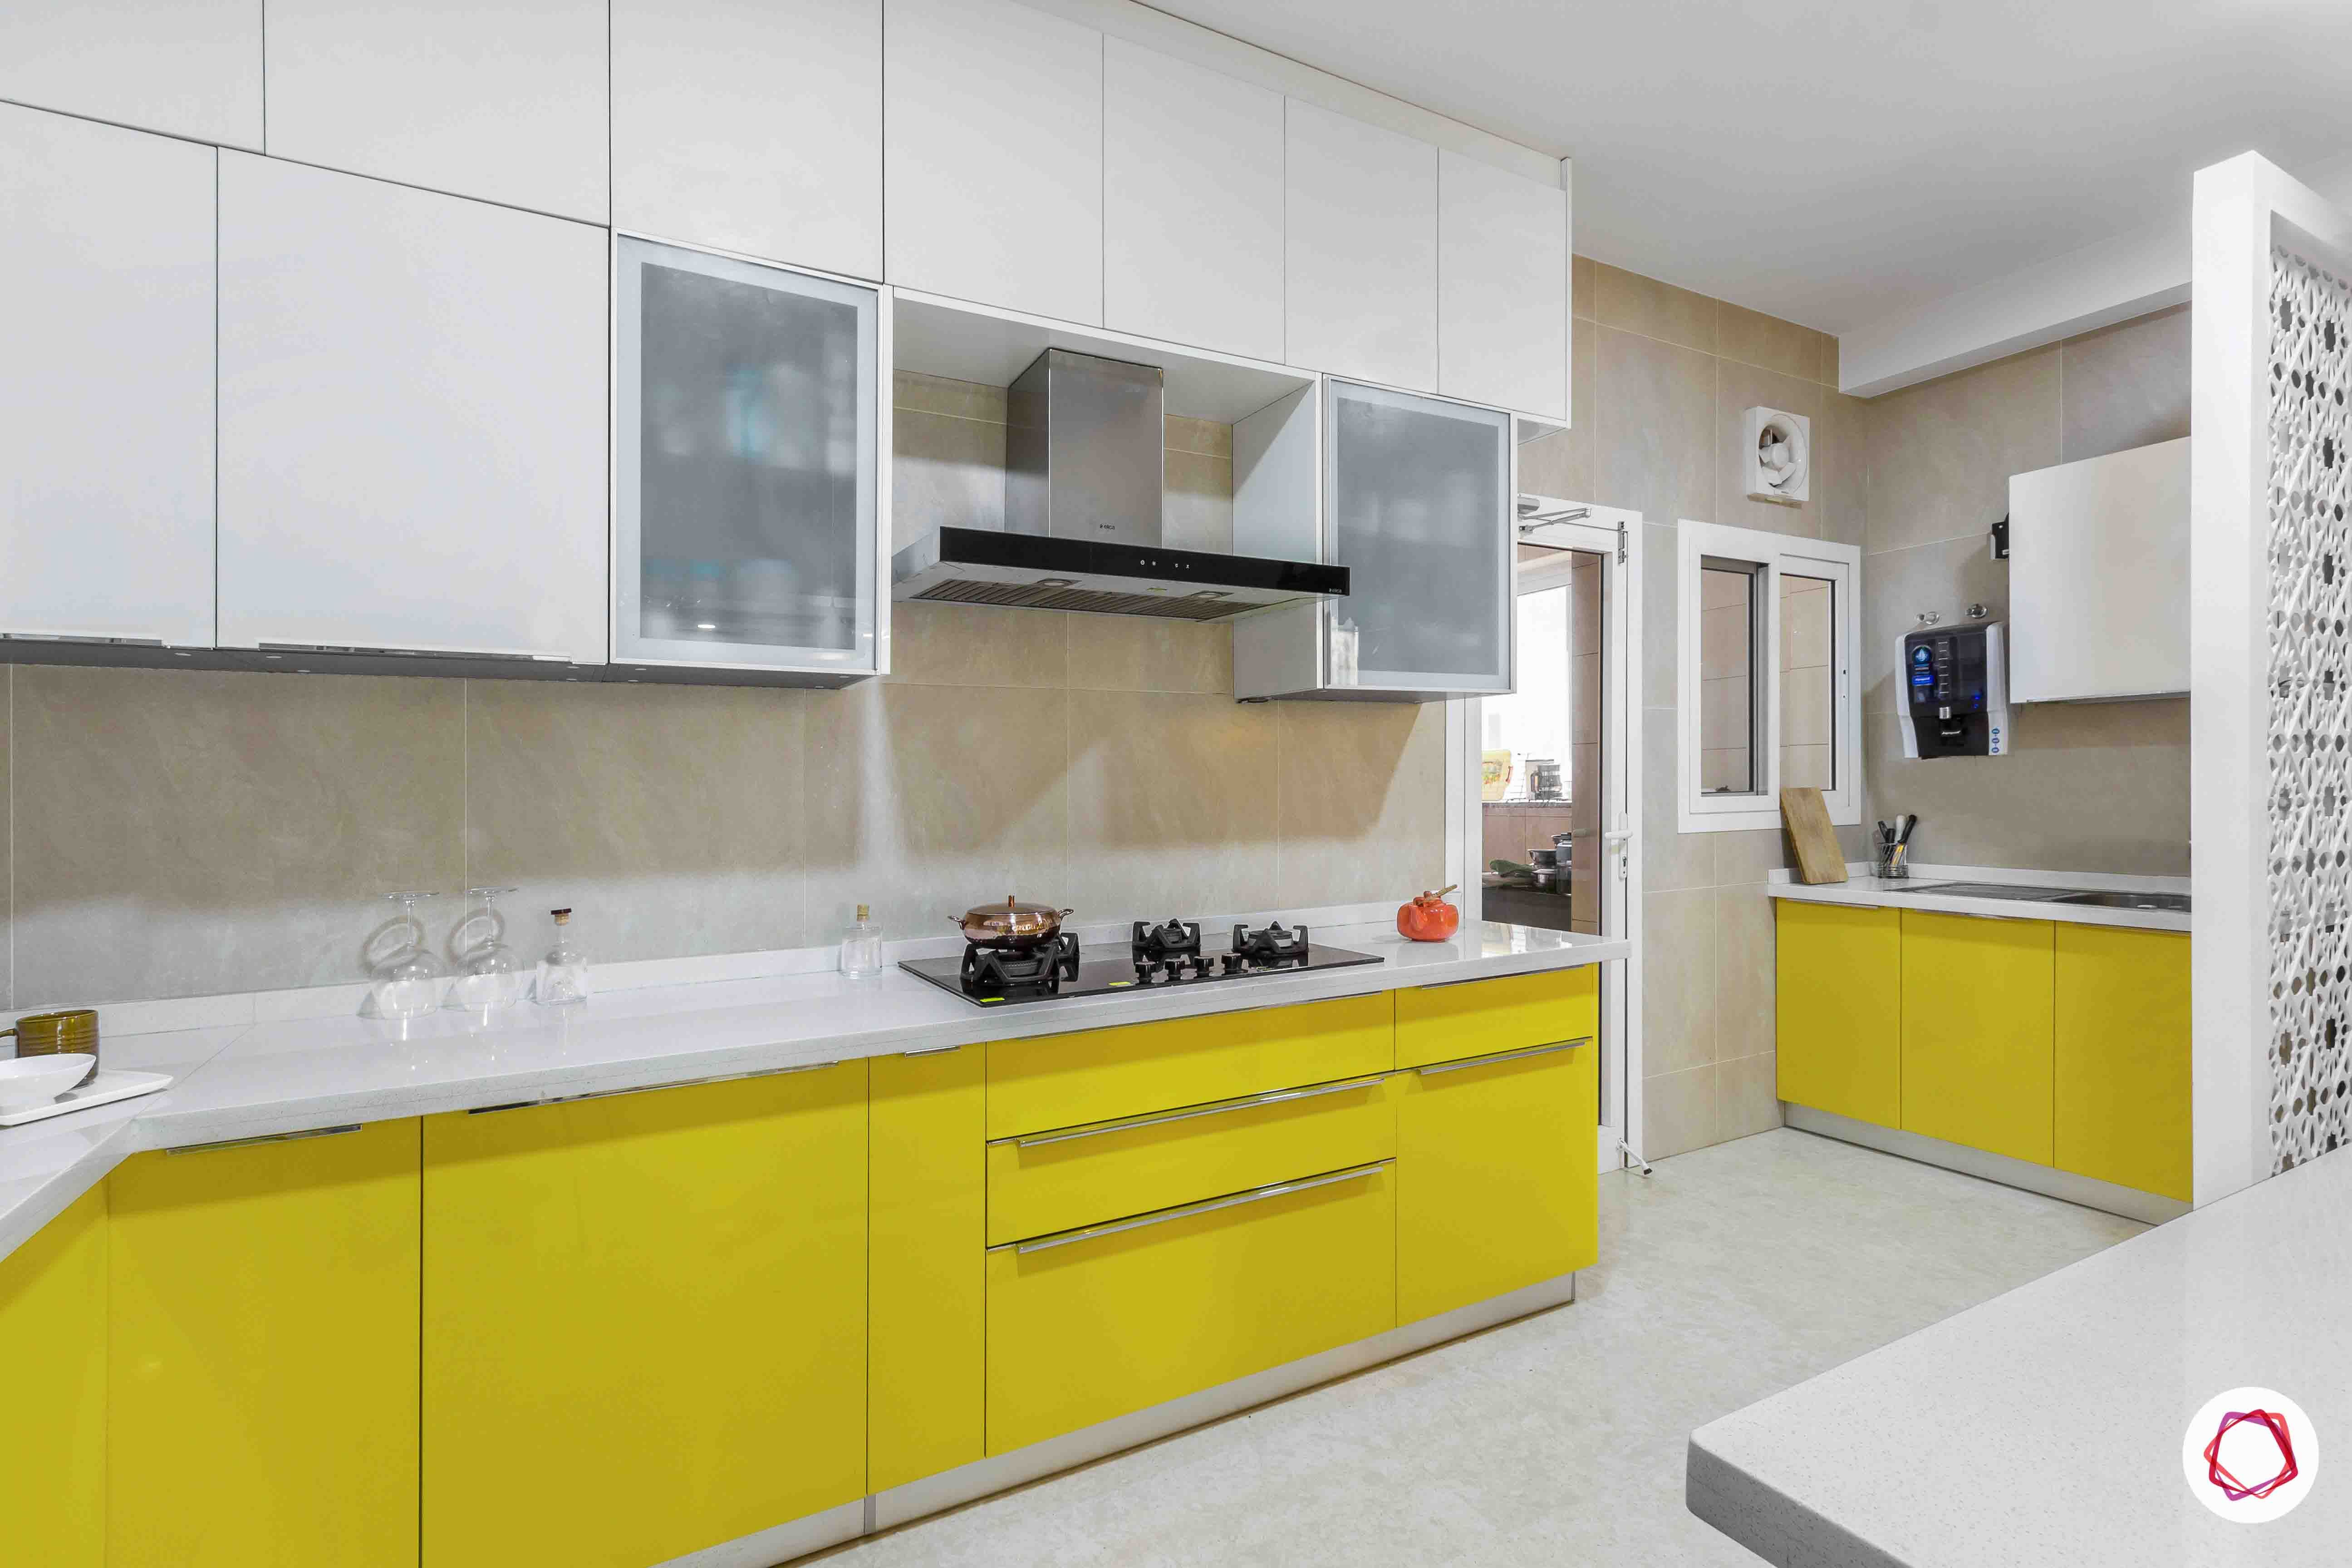 sobha forest view-modular kitchen design-quartz countertop-lofts-yellow base units-hob unit